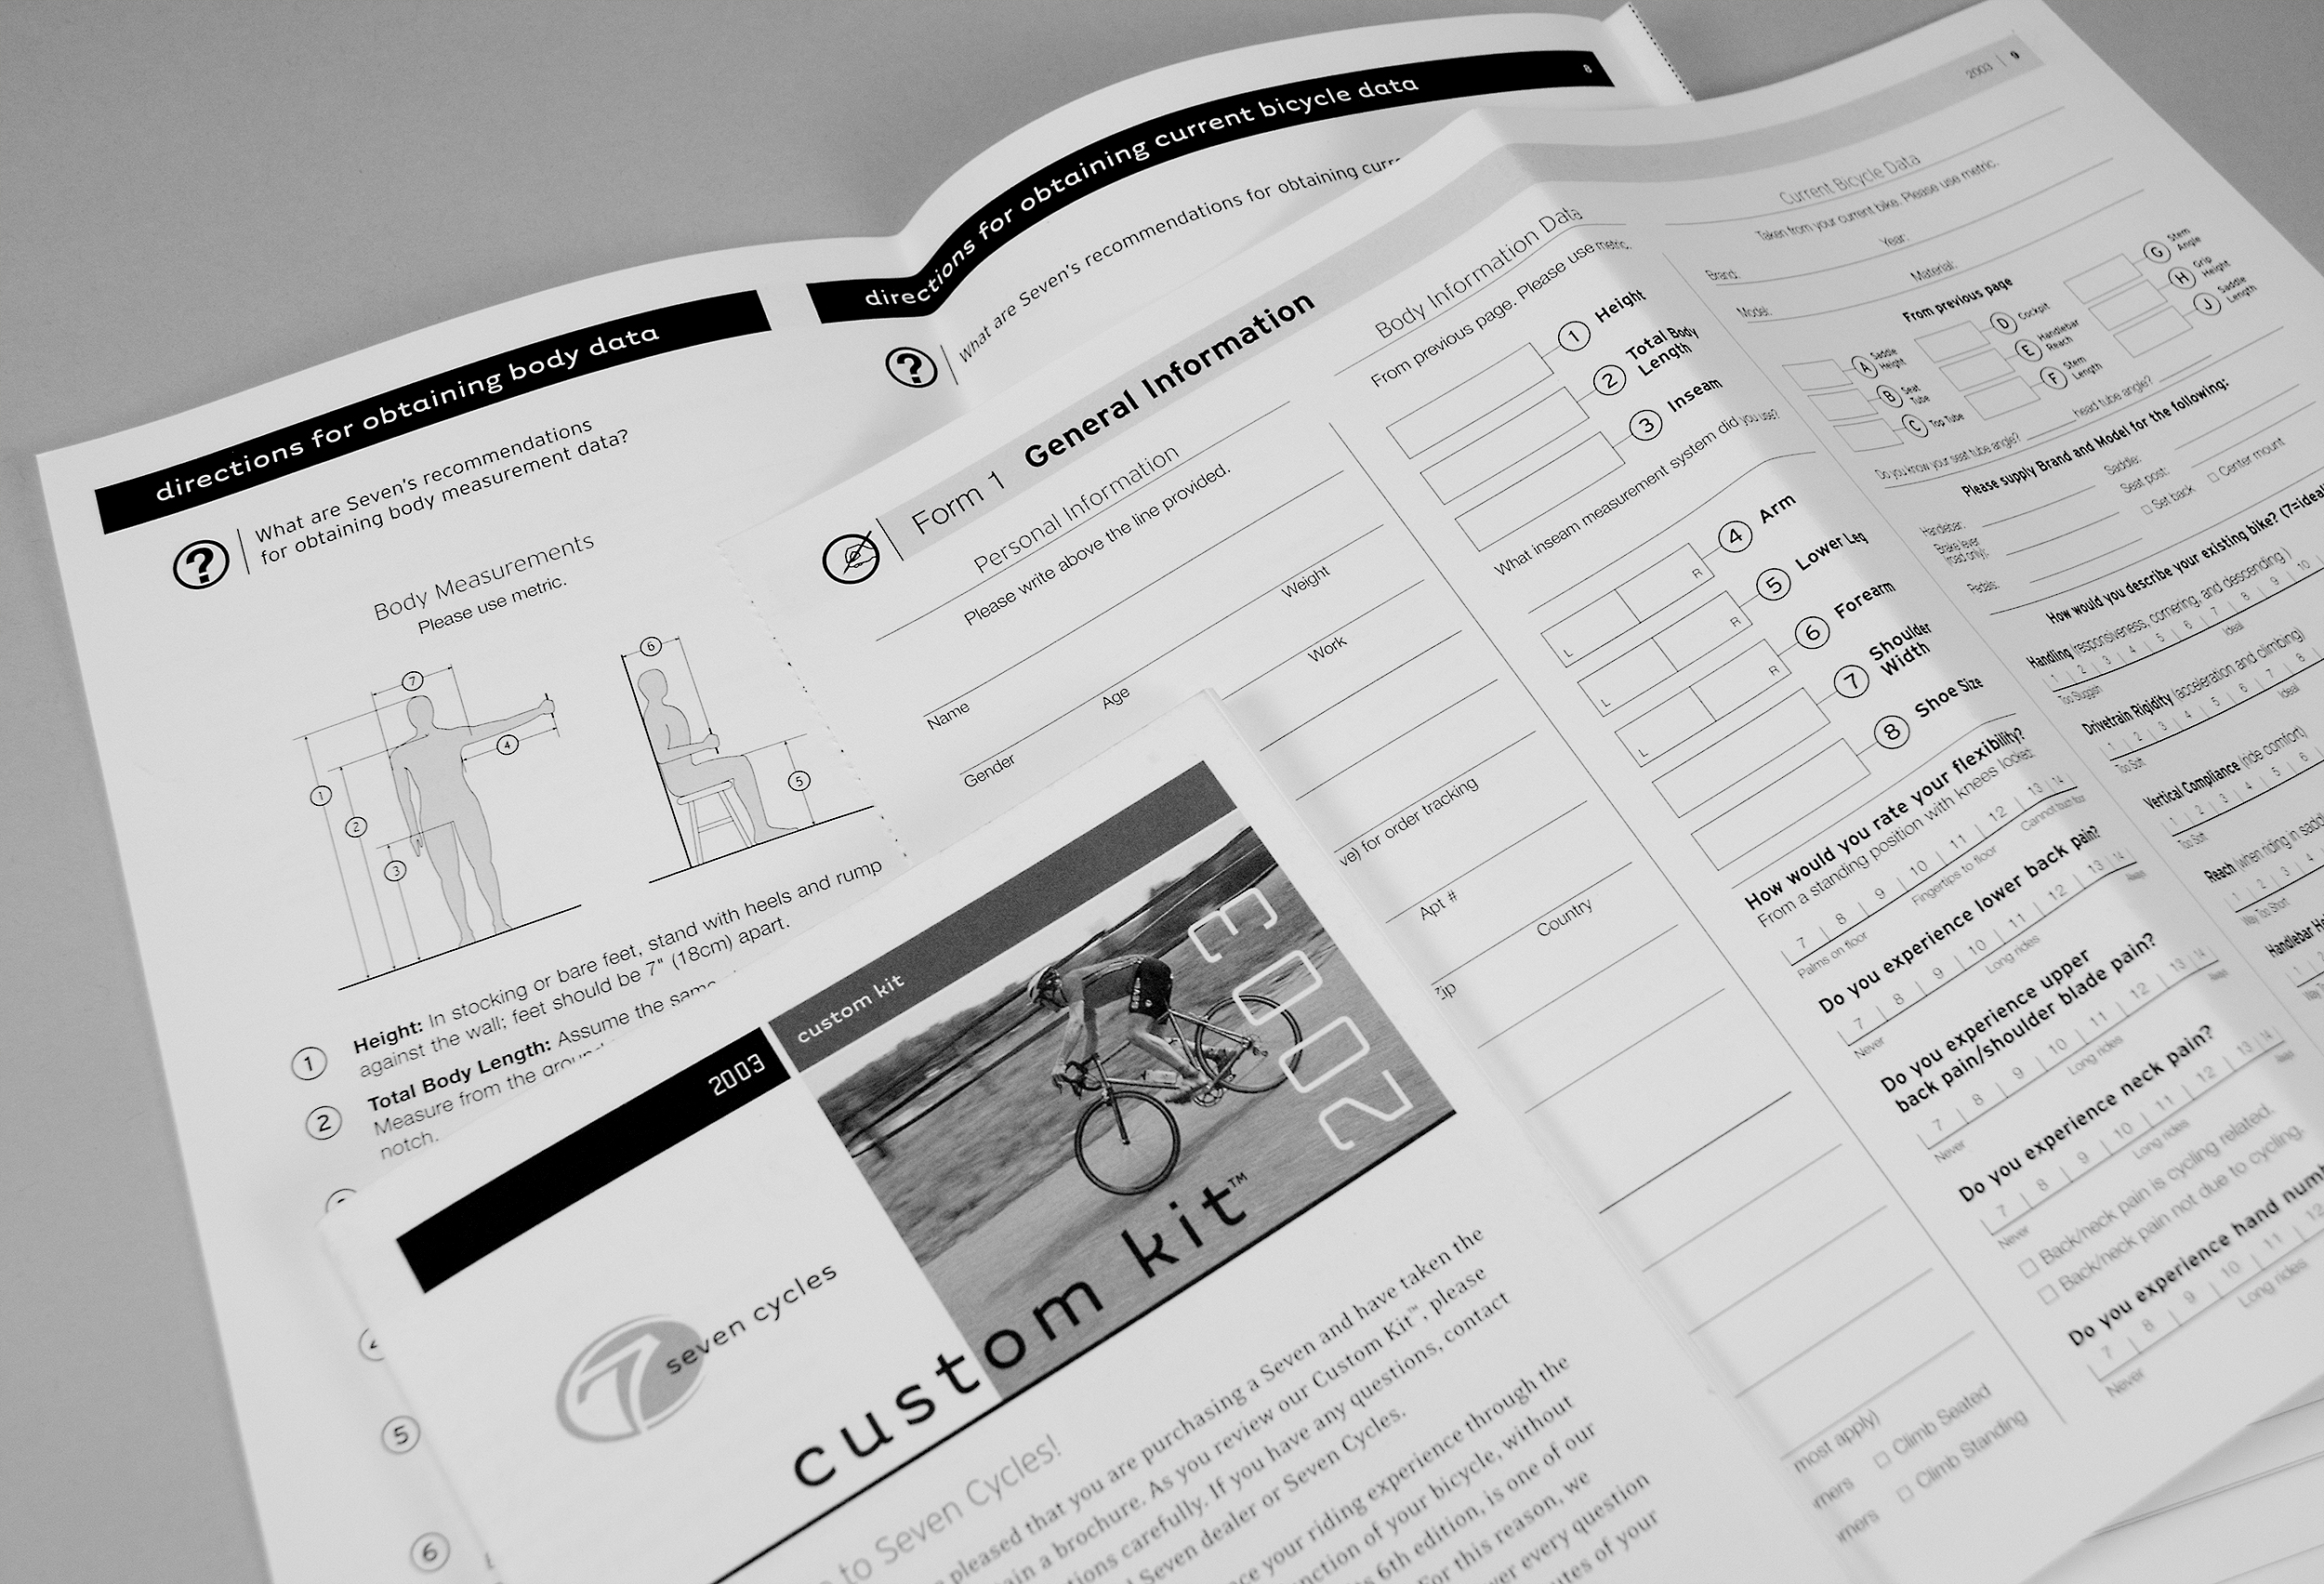   Seven Cycles Fit Kit Form  • designer/director: Michael Balint 